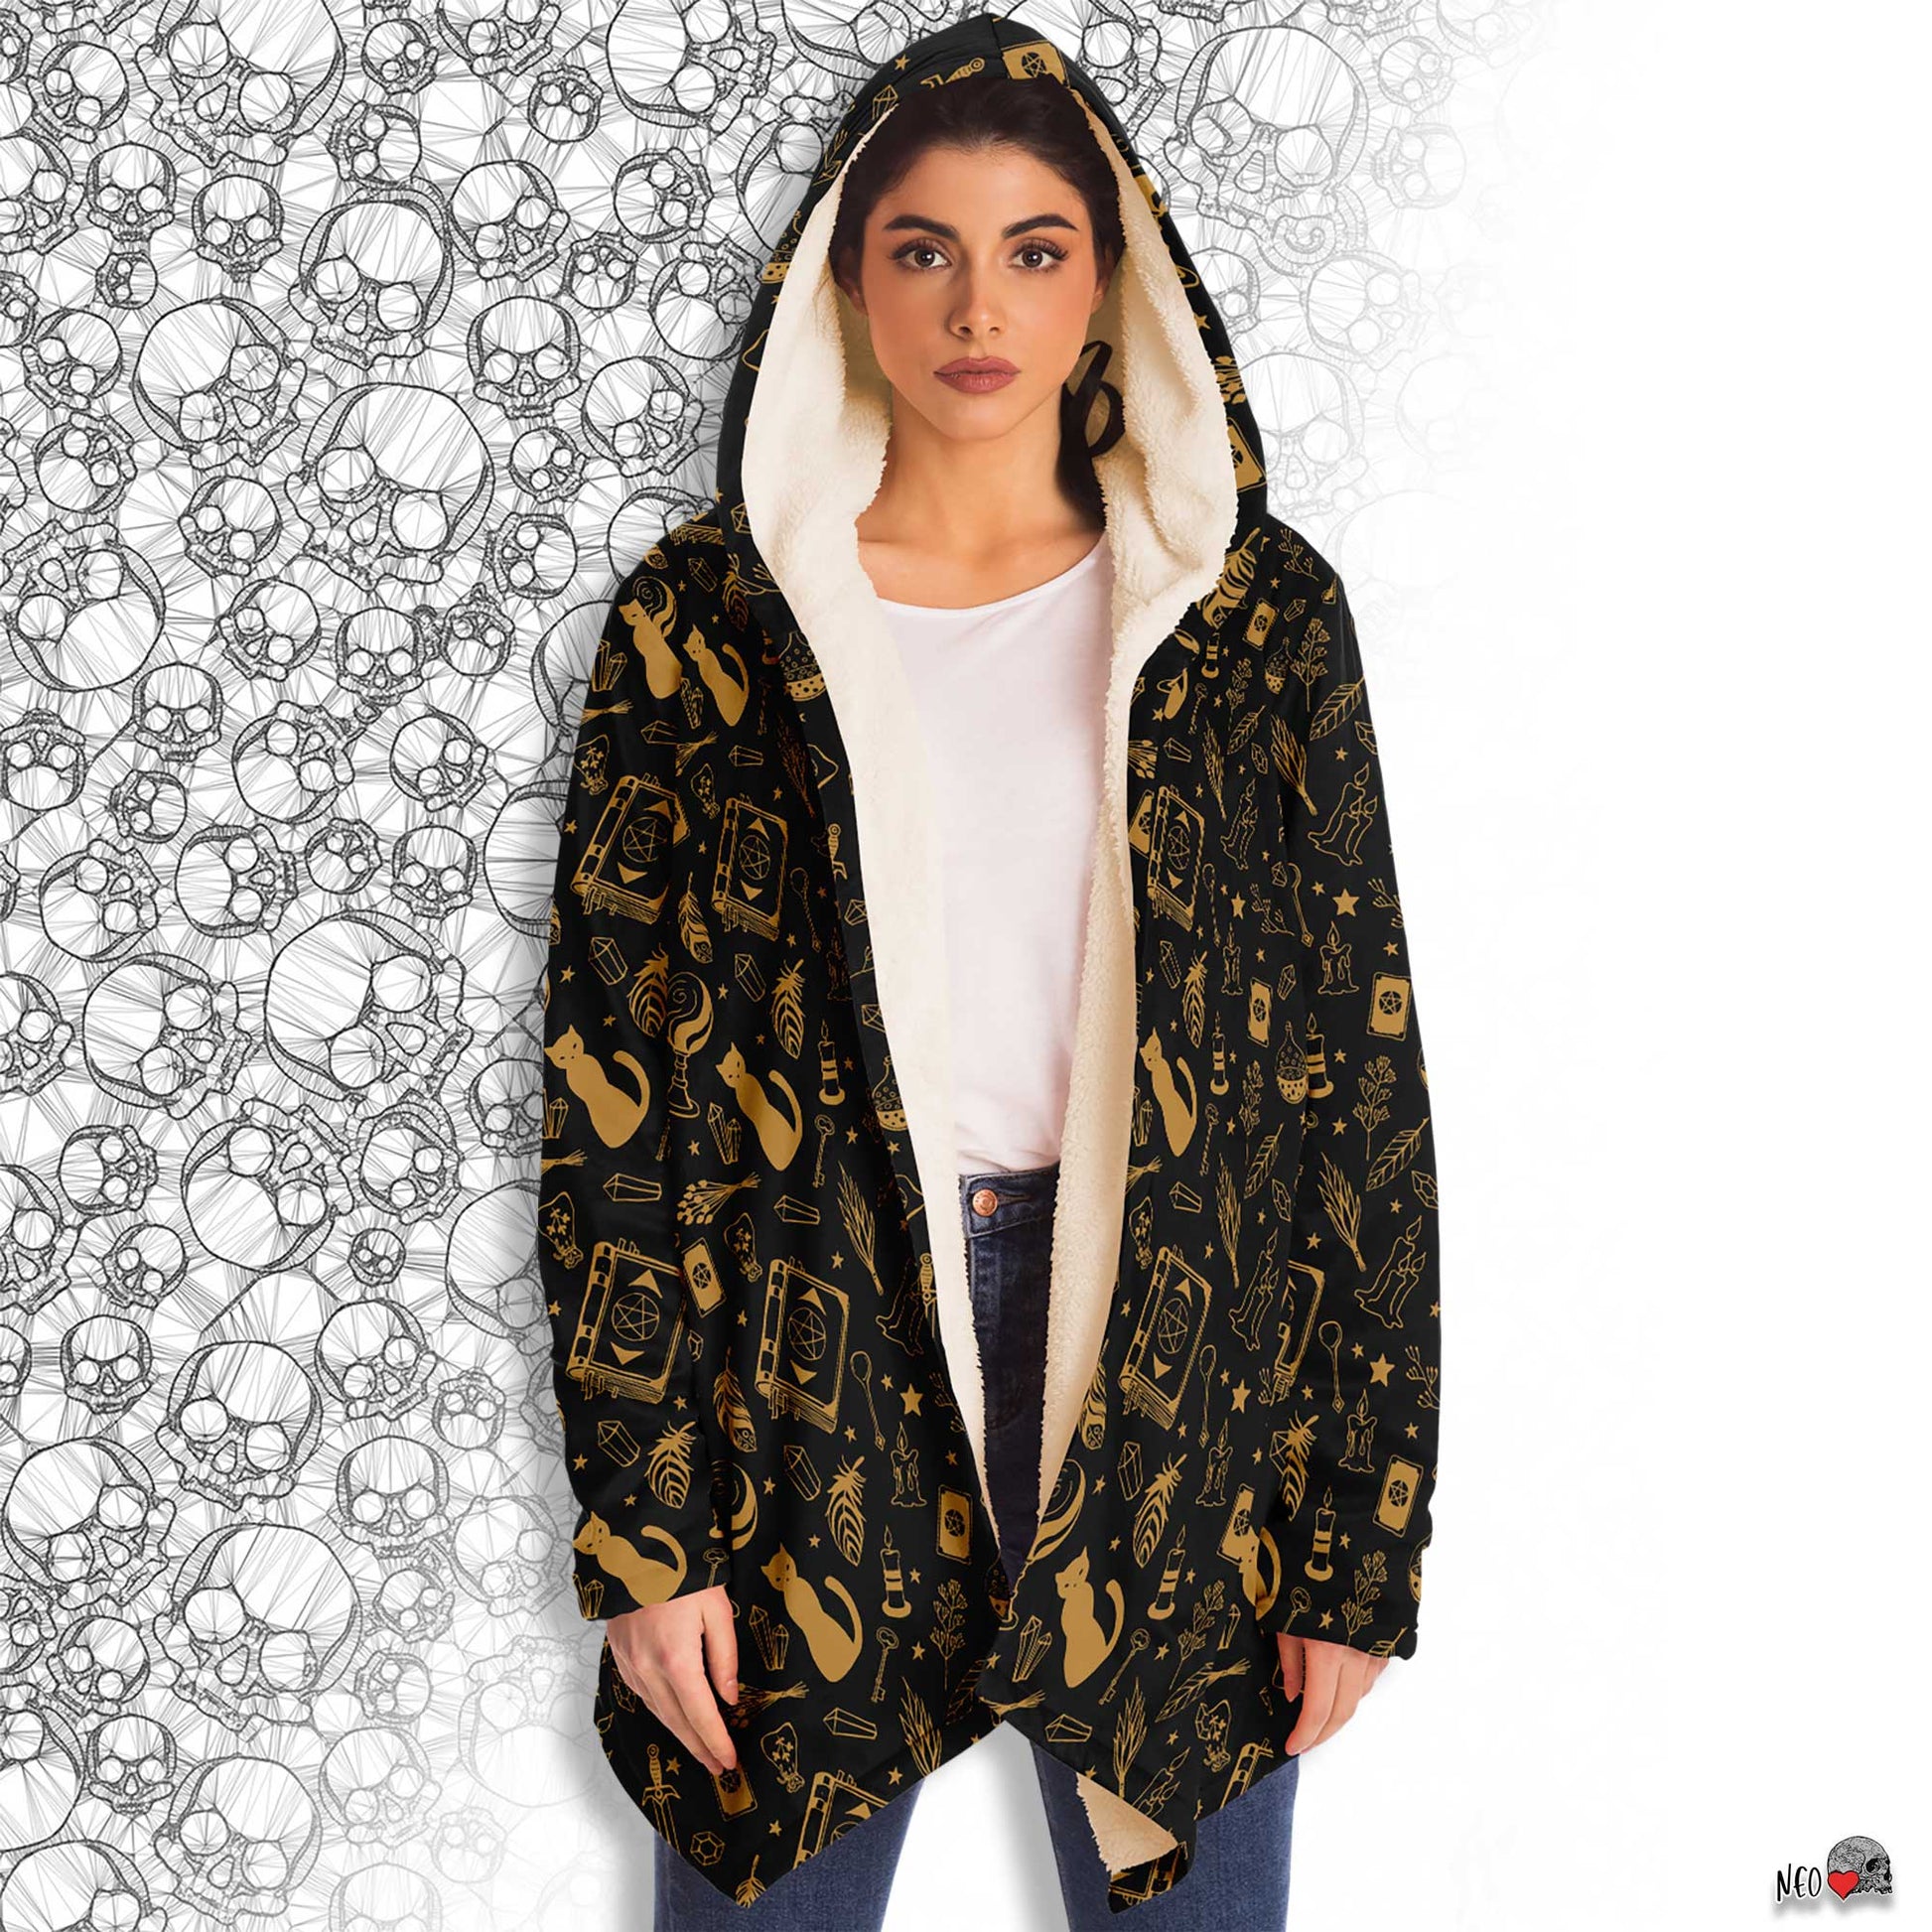 wiccan hooded cloak - neoskull